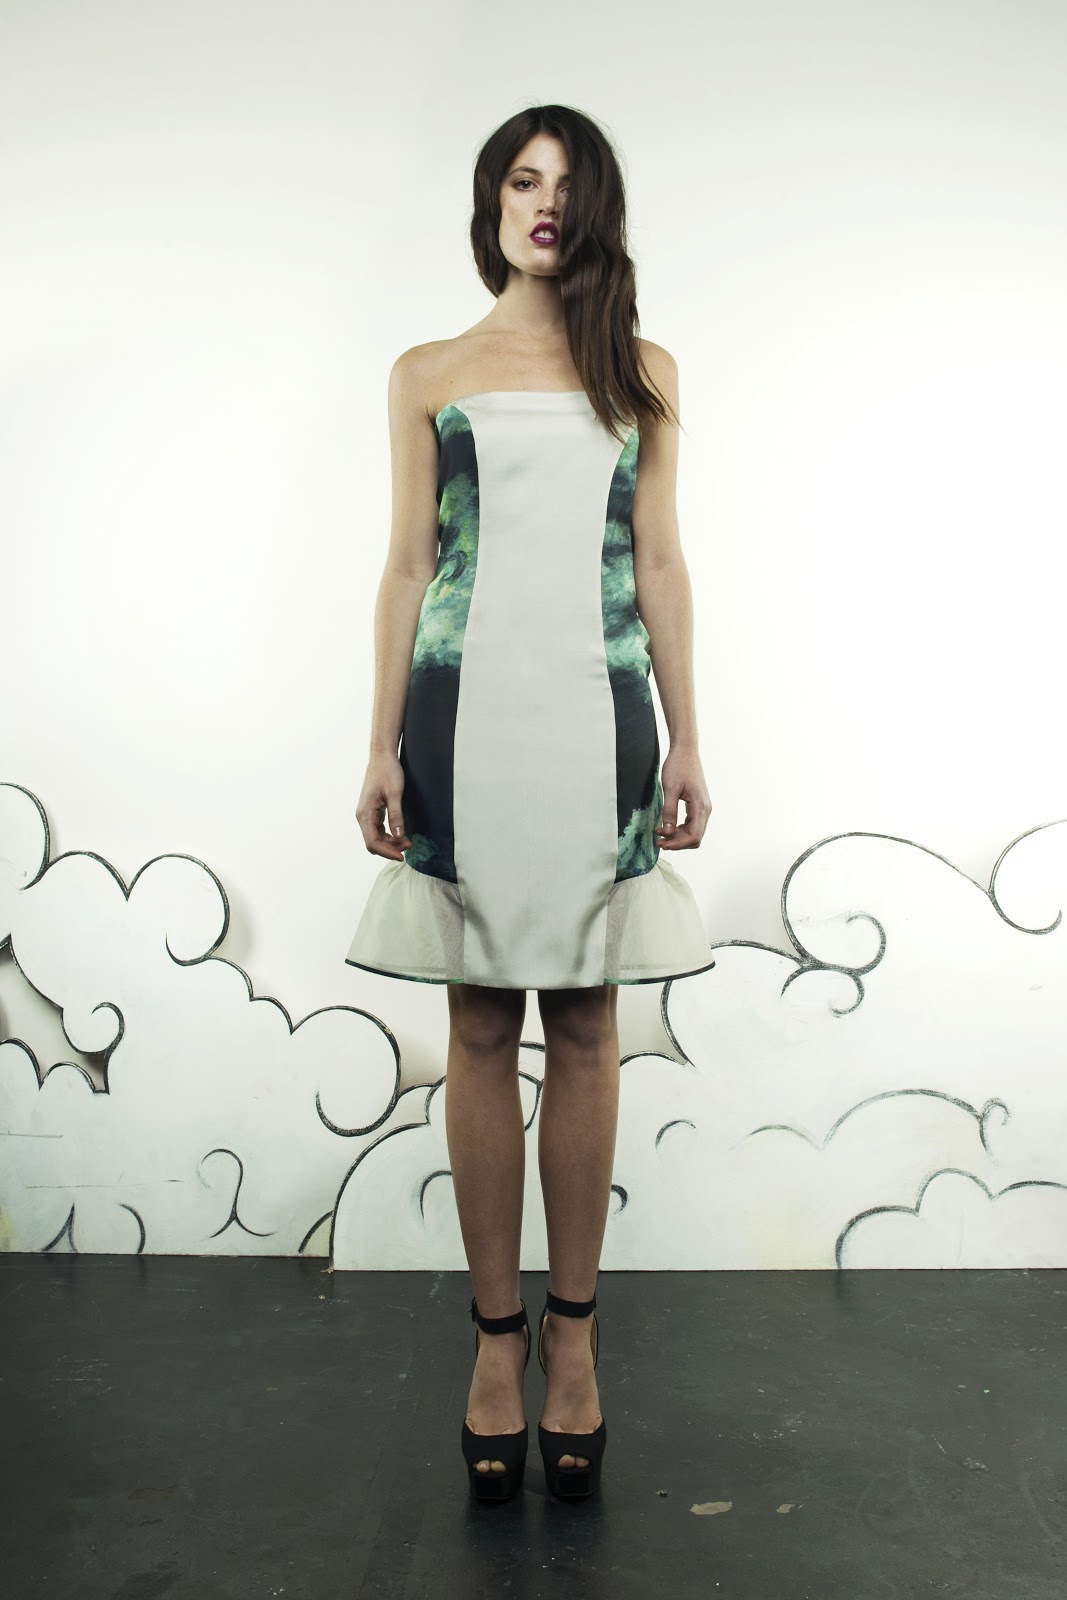 BARON OH fashion designer: 2013 Spring Summer Collection - The florist